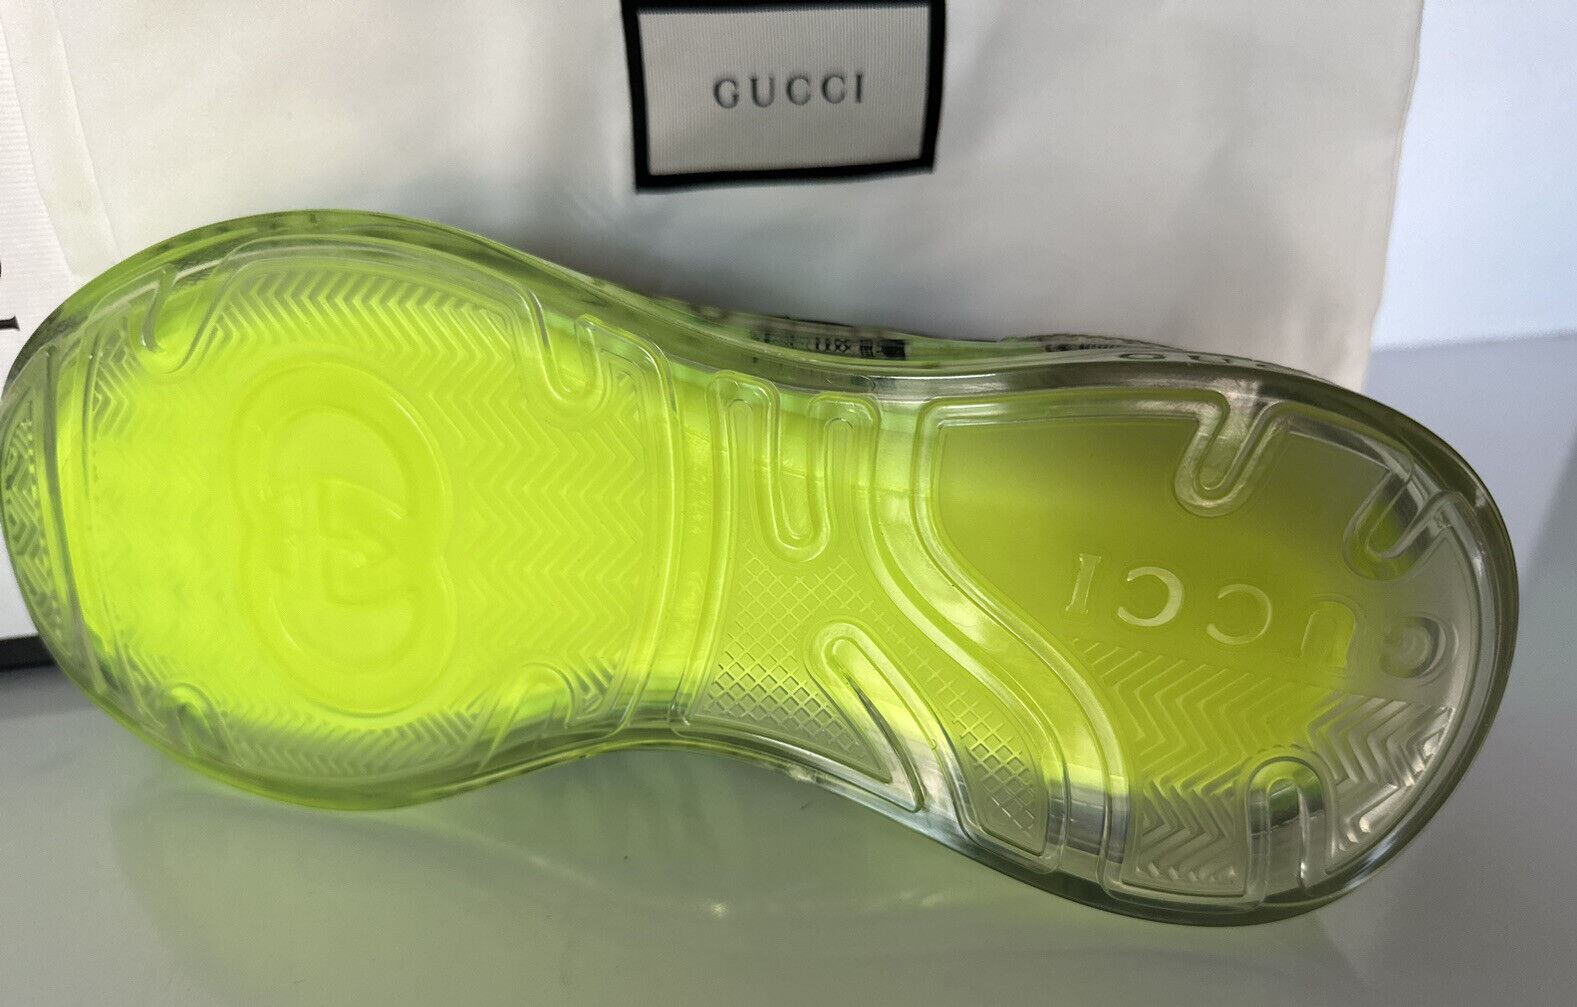 NIB Gucci Ultrapace R Sneakers in Schwarz und Grün 8,5 US (Gucci 8) 620337 IT 